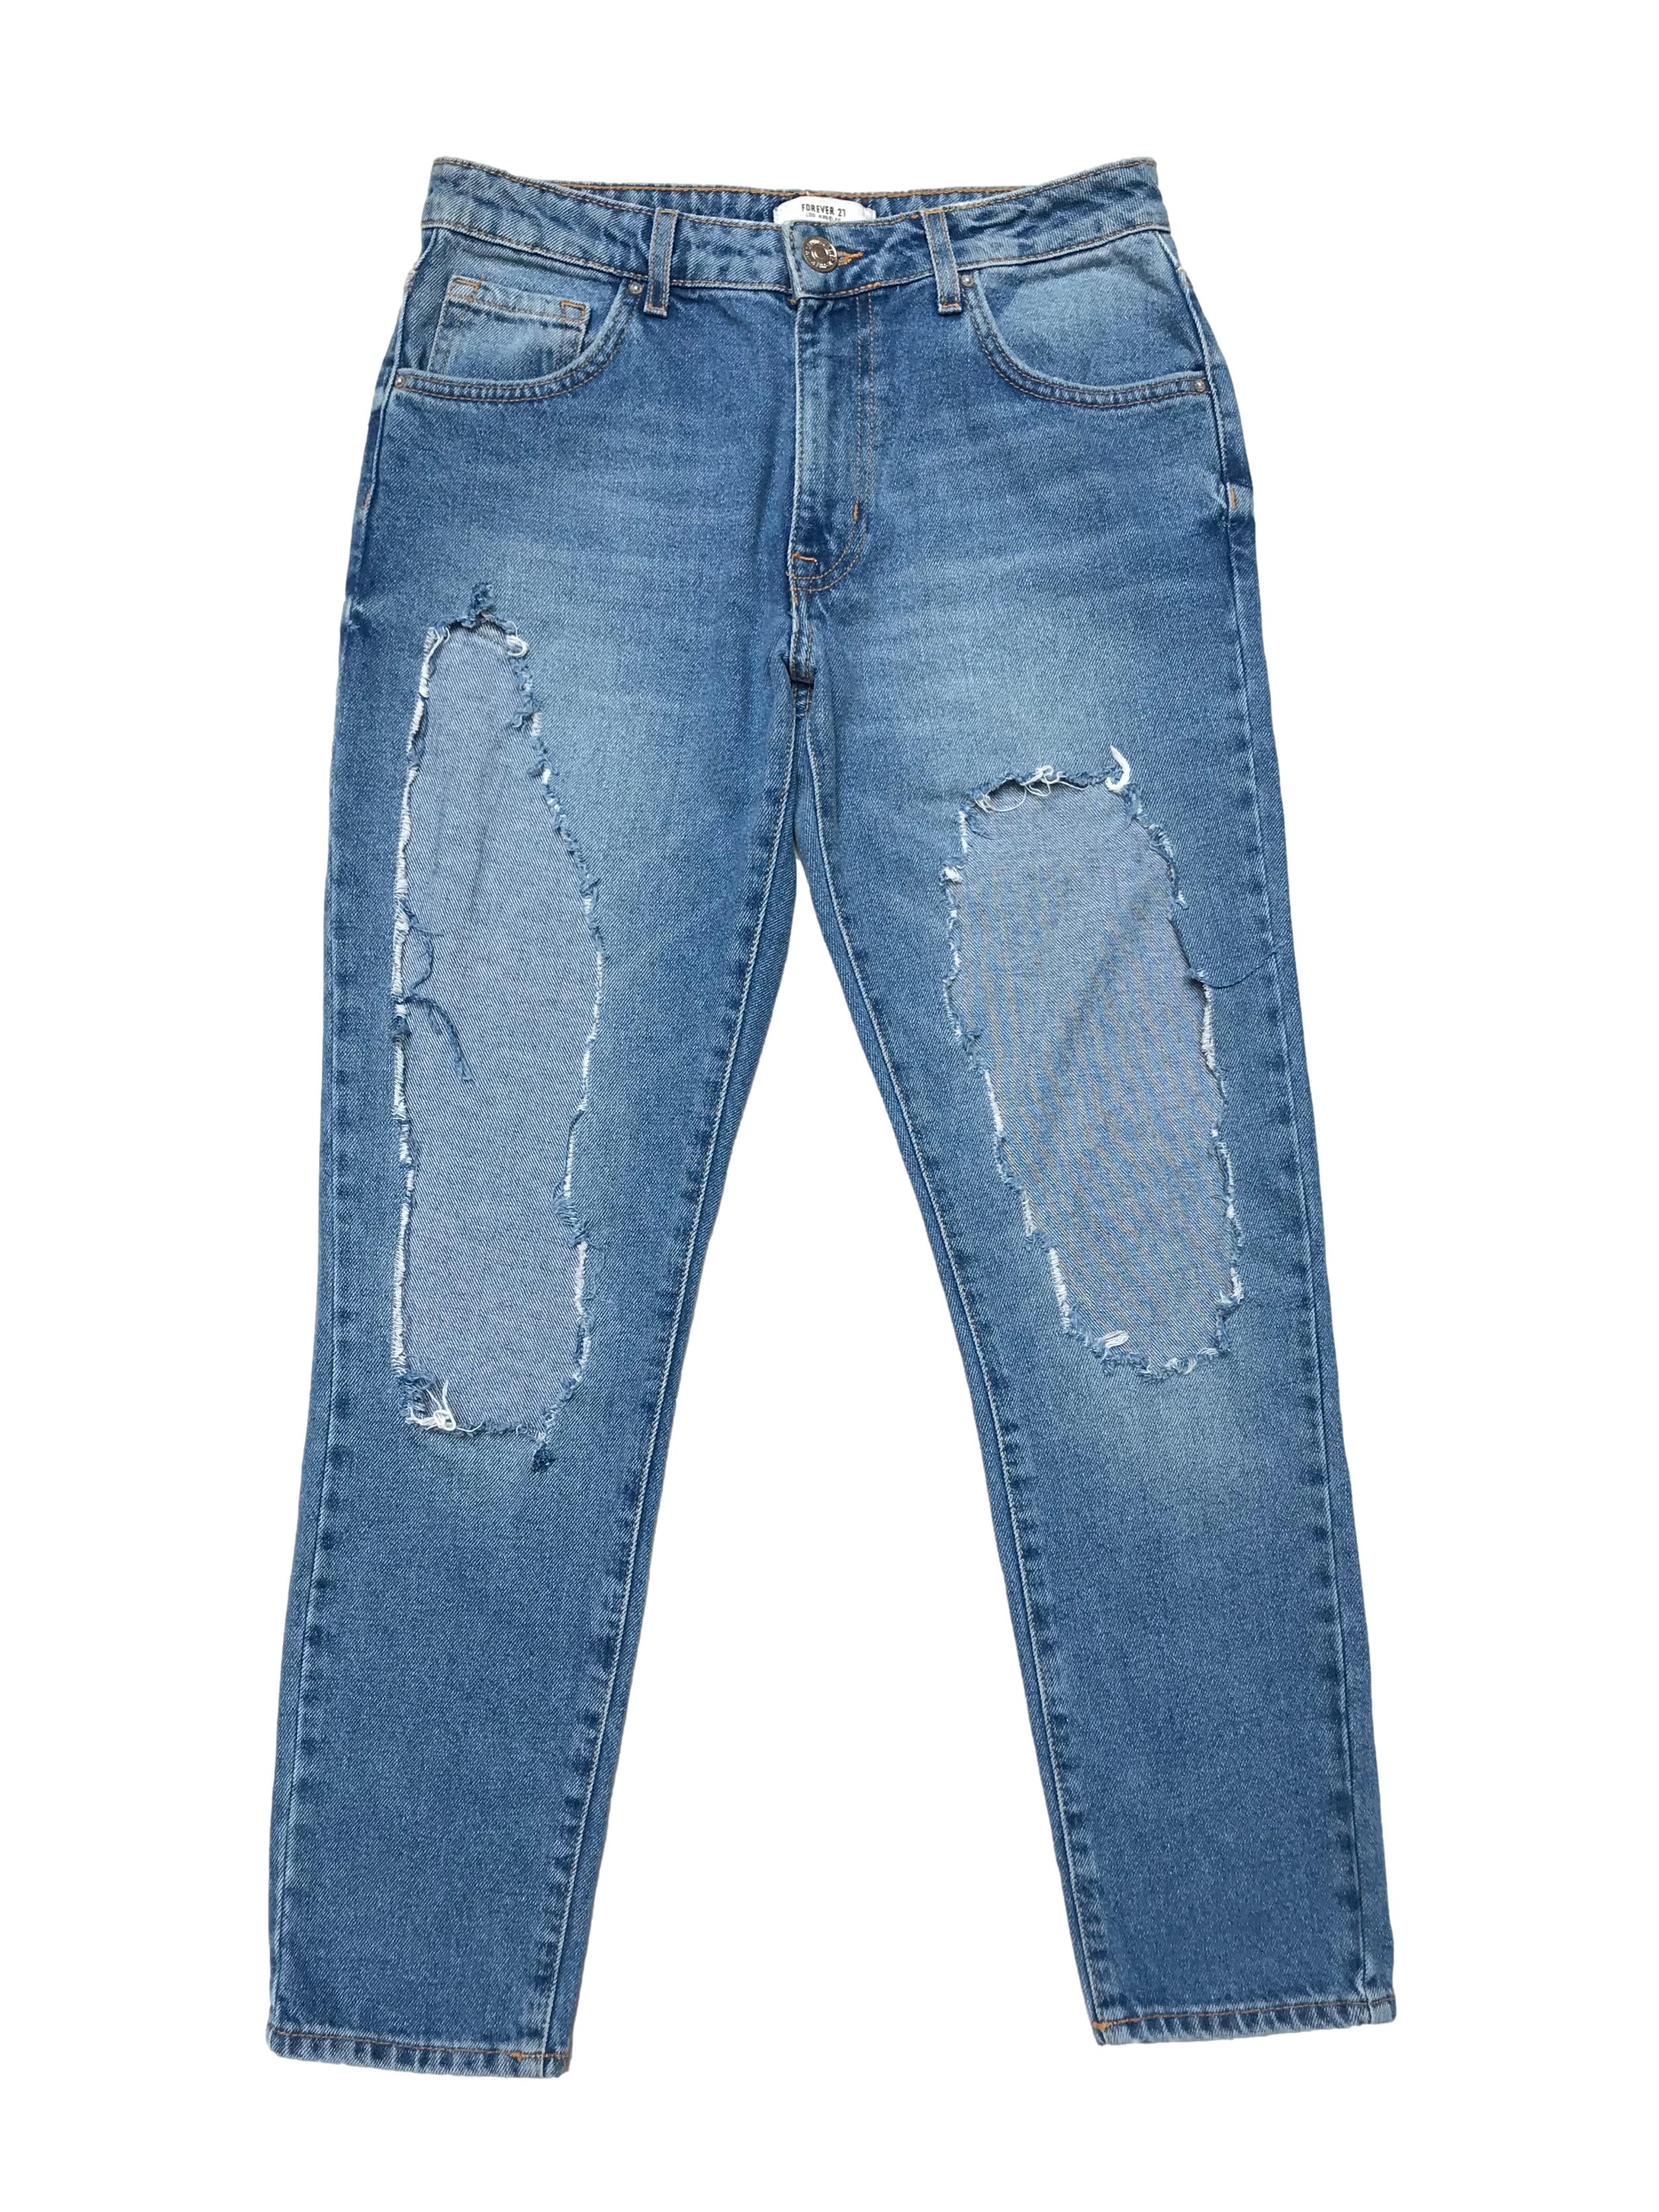 Destroyed jeans Forever21 denim rígido 1005 algodón, corte boyfriend. Pretina 74cm Largo 91cm